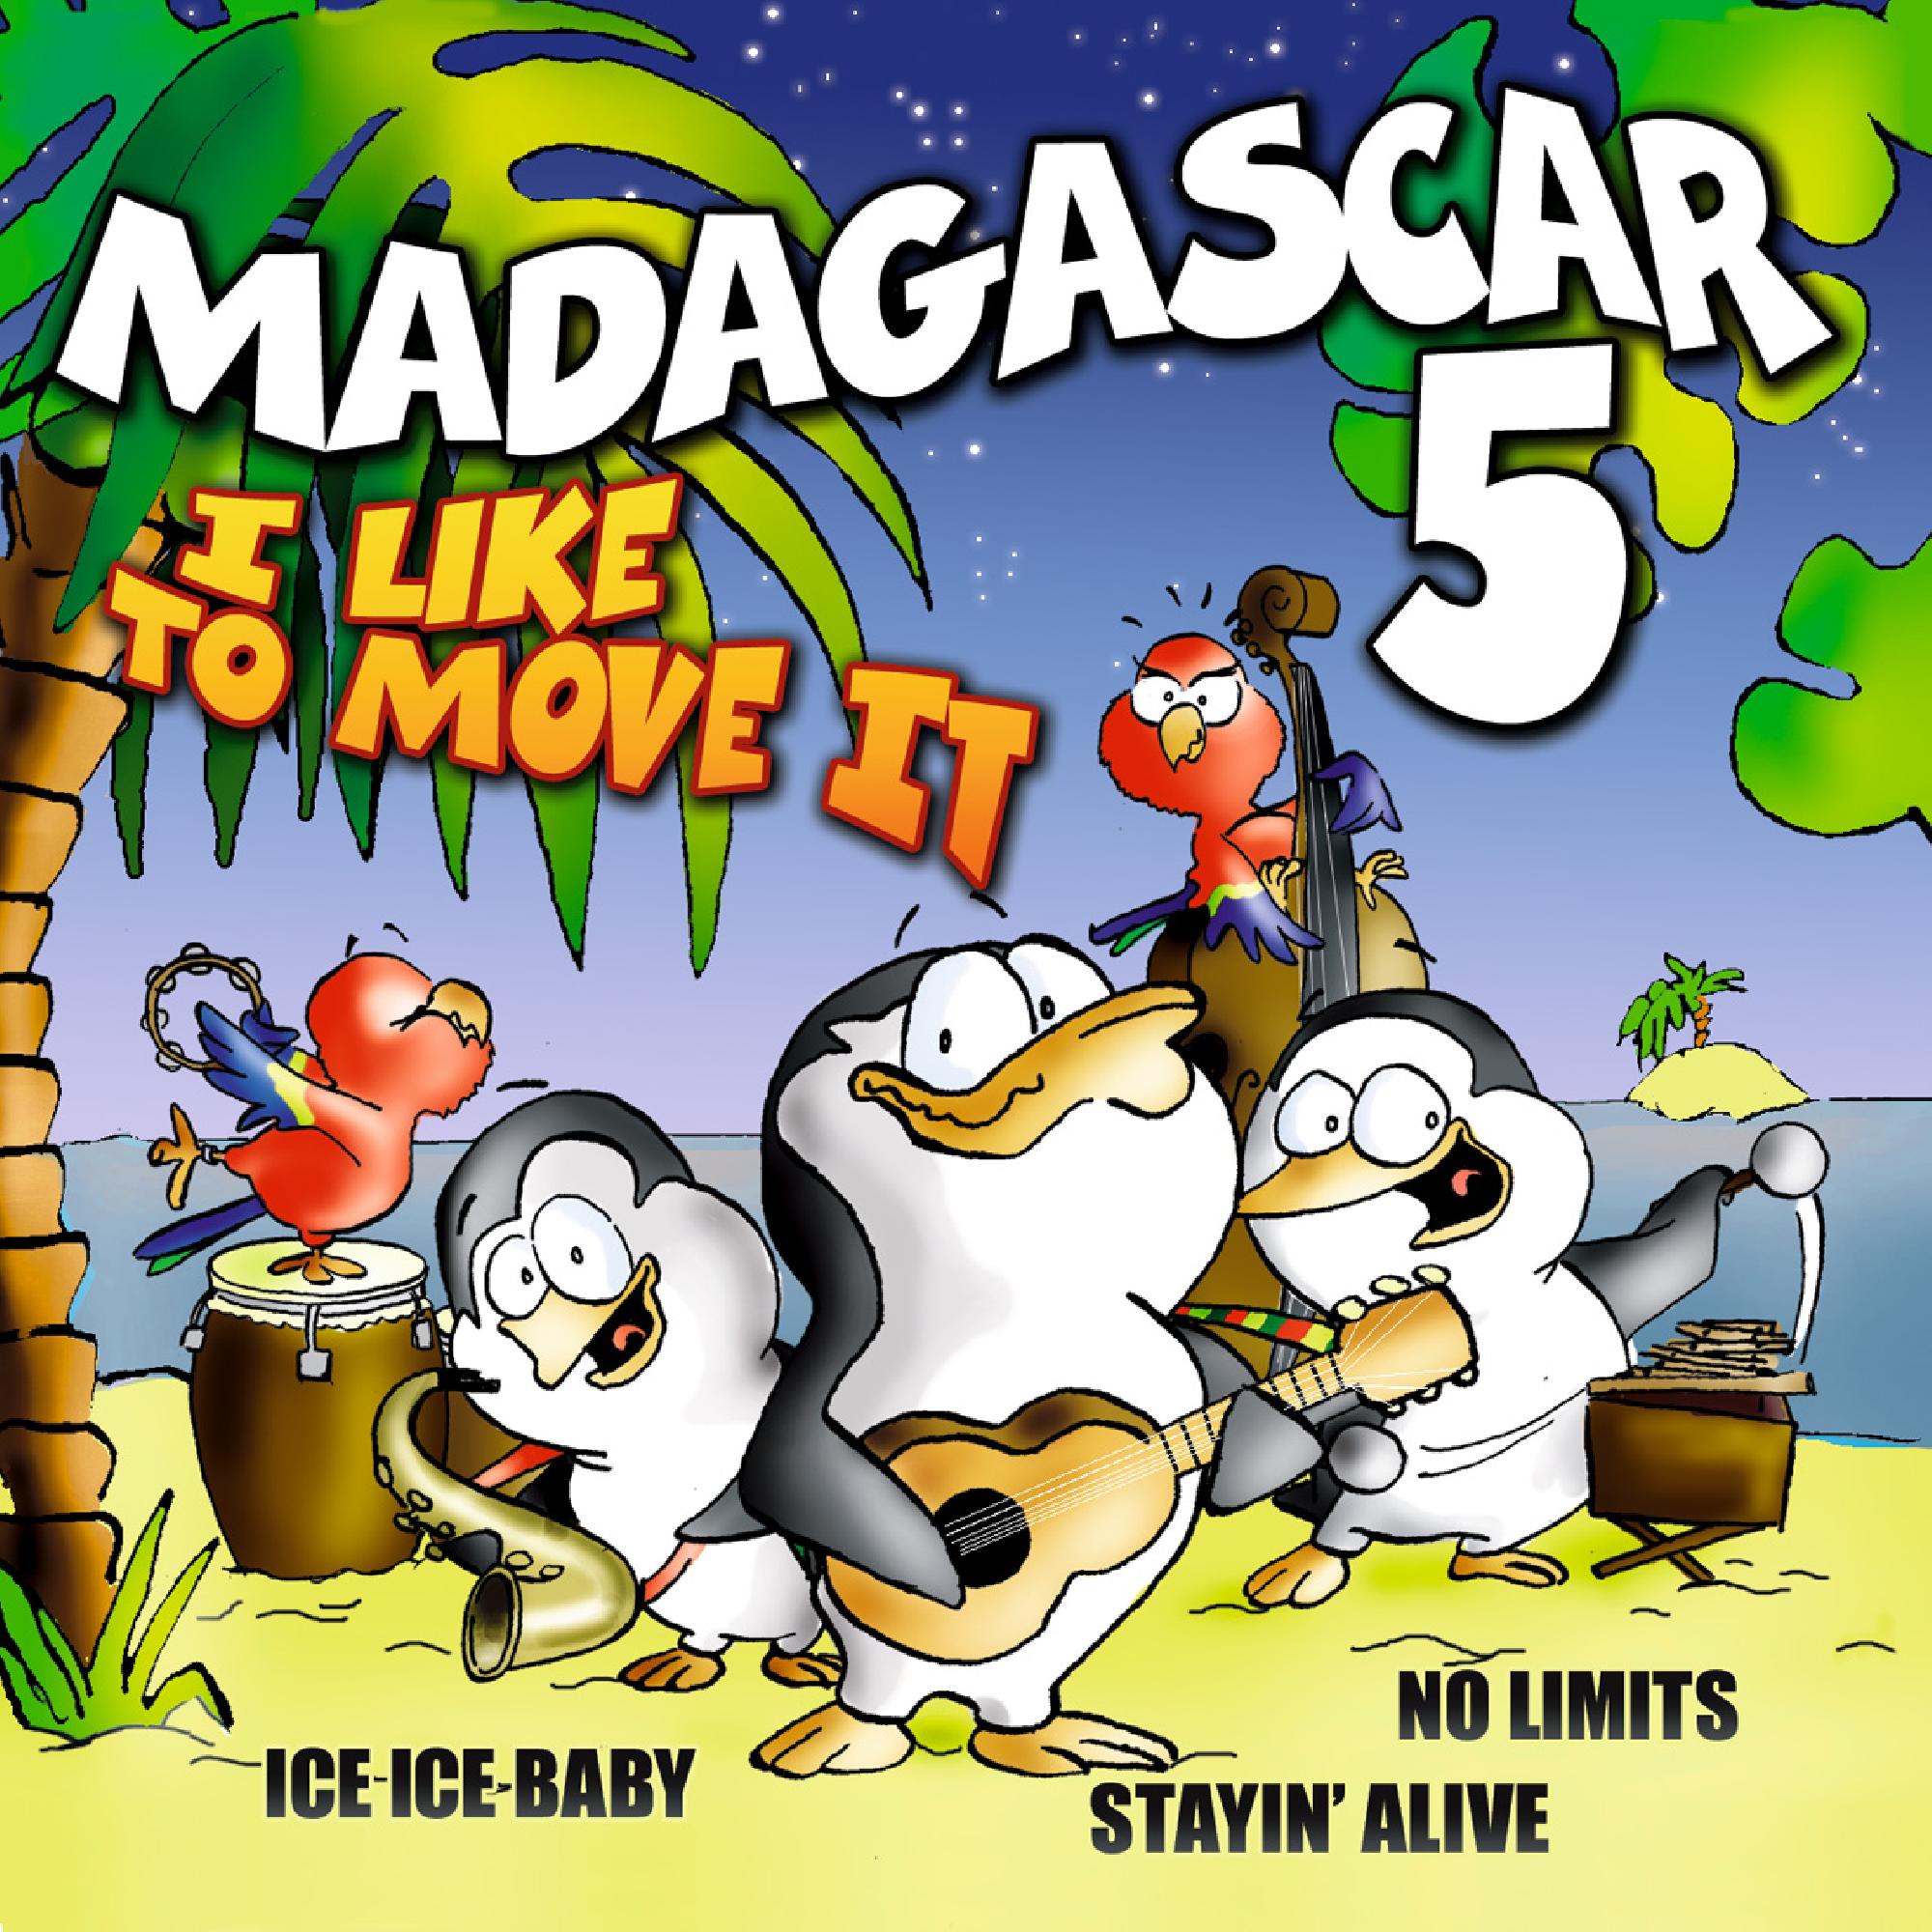 Включи i like to move it мадагаскар. Компакт диск Мадагаскар. Madagascar 5. I like to move it Madagascar. Мадагаскар 5 DVD.